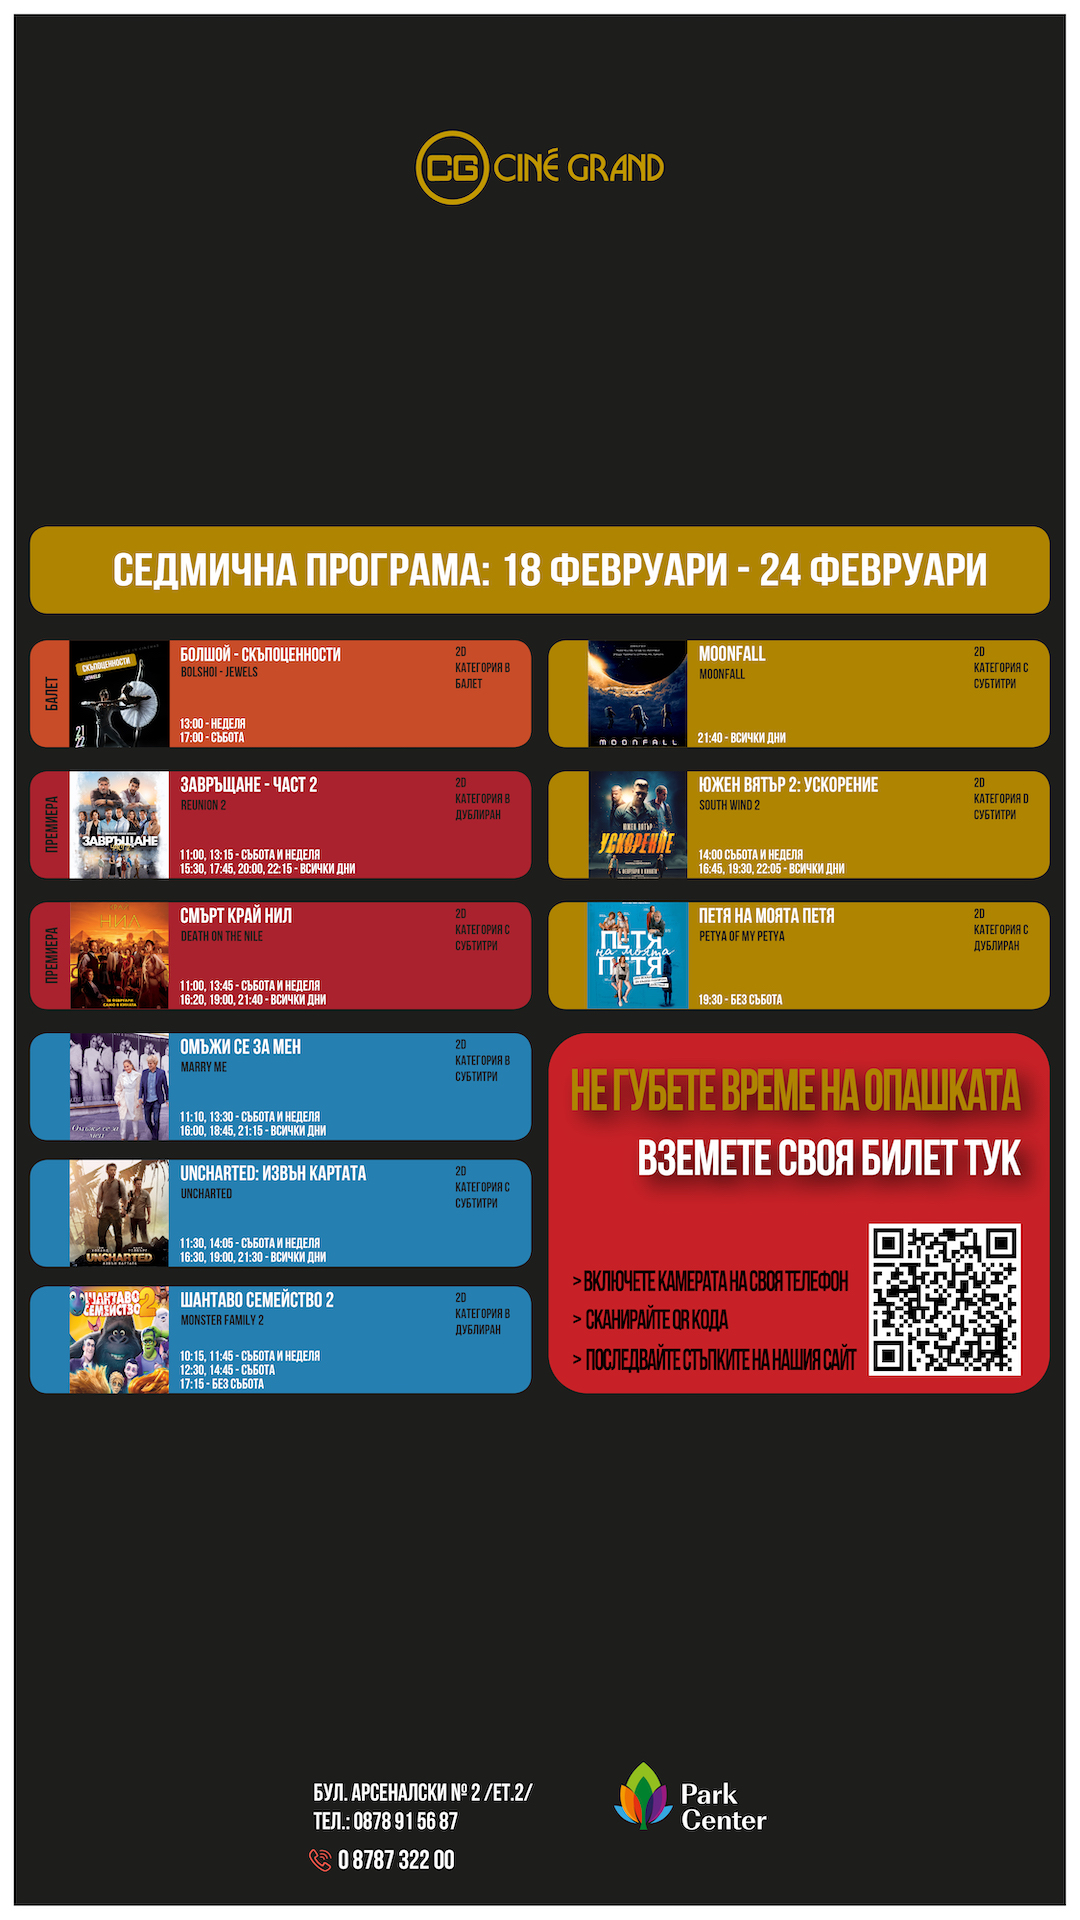 Cine Grand Парк Център София: Кино програма - 18-24 февруари 2022